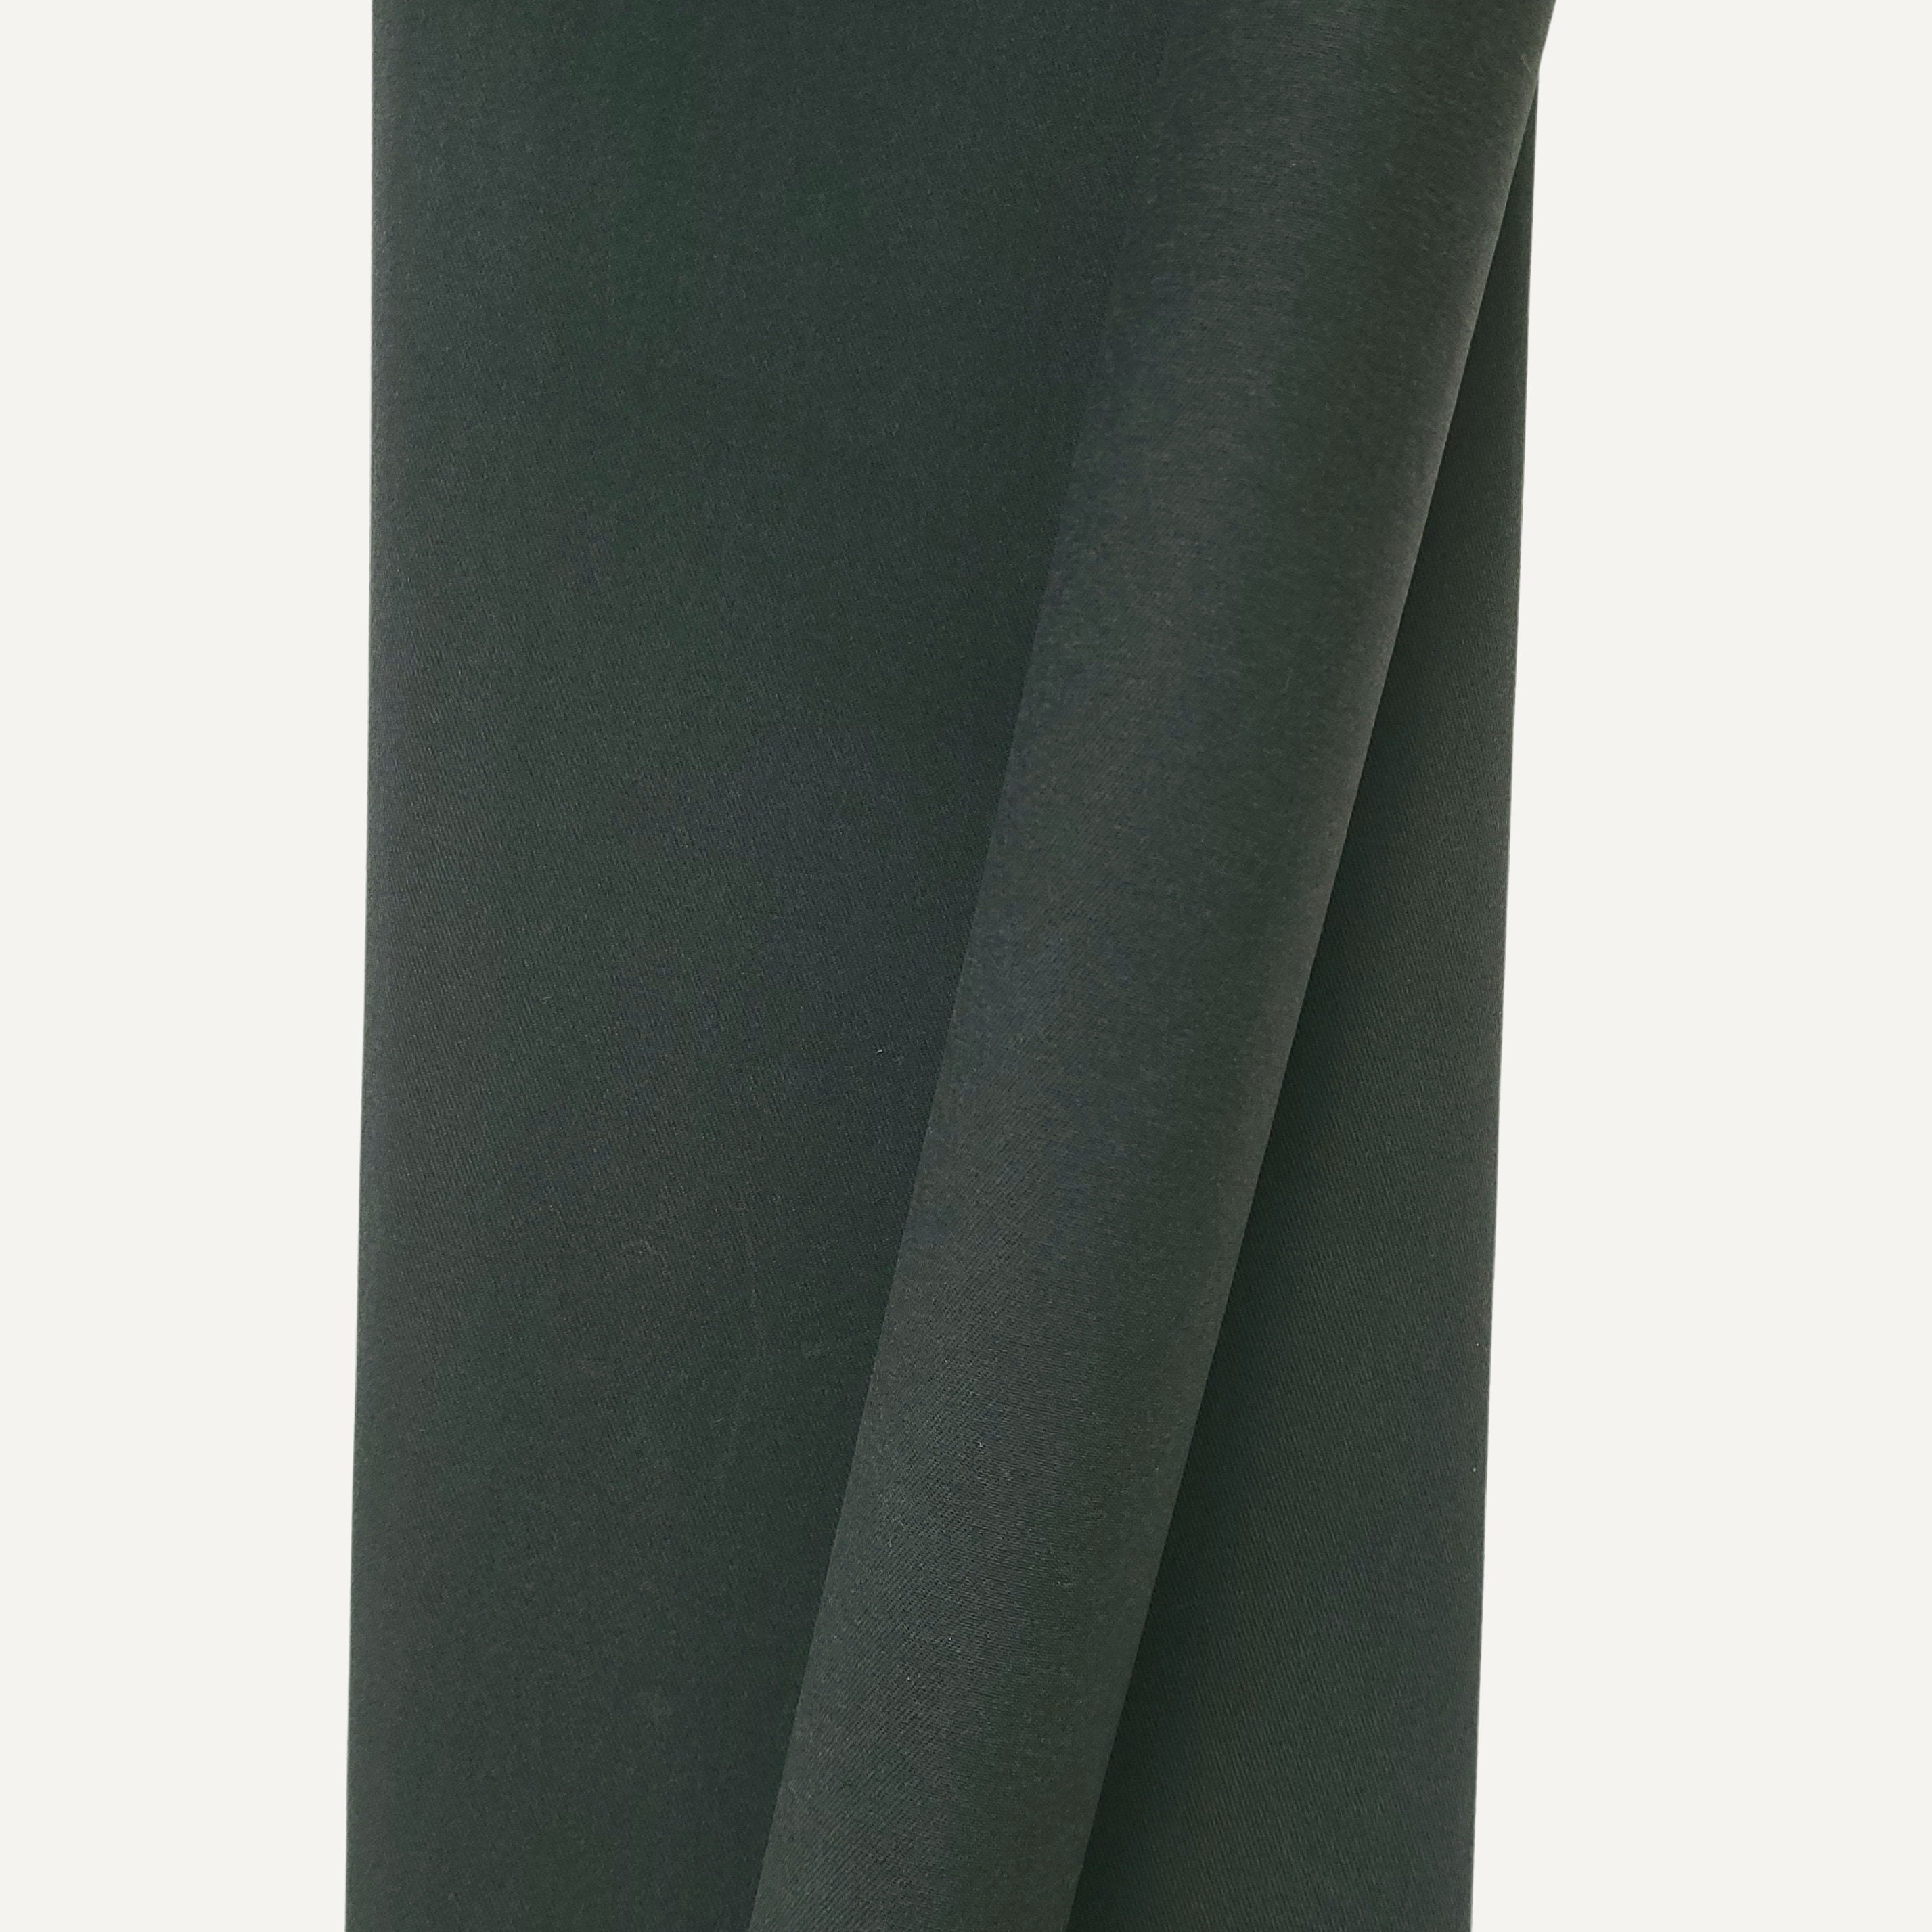 Heavyweight Waxed Twill Olive | Very Heavyweight Twill Fabric | Home Decor  Fabric | 60 Wide